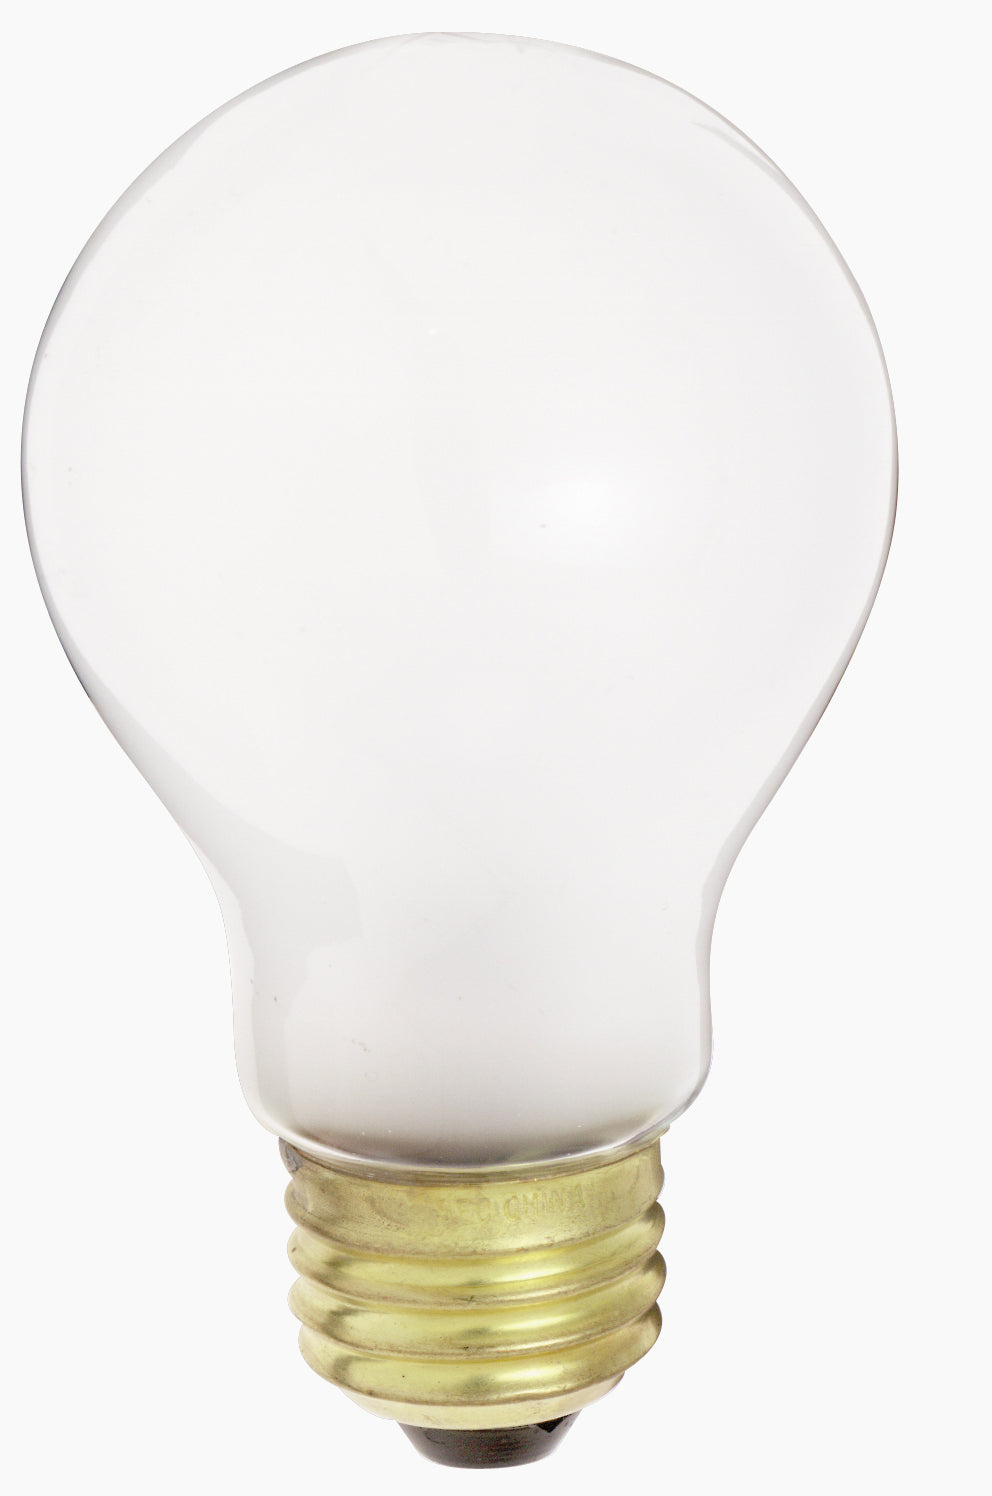 Satco - S5010 - Light Bulb